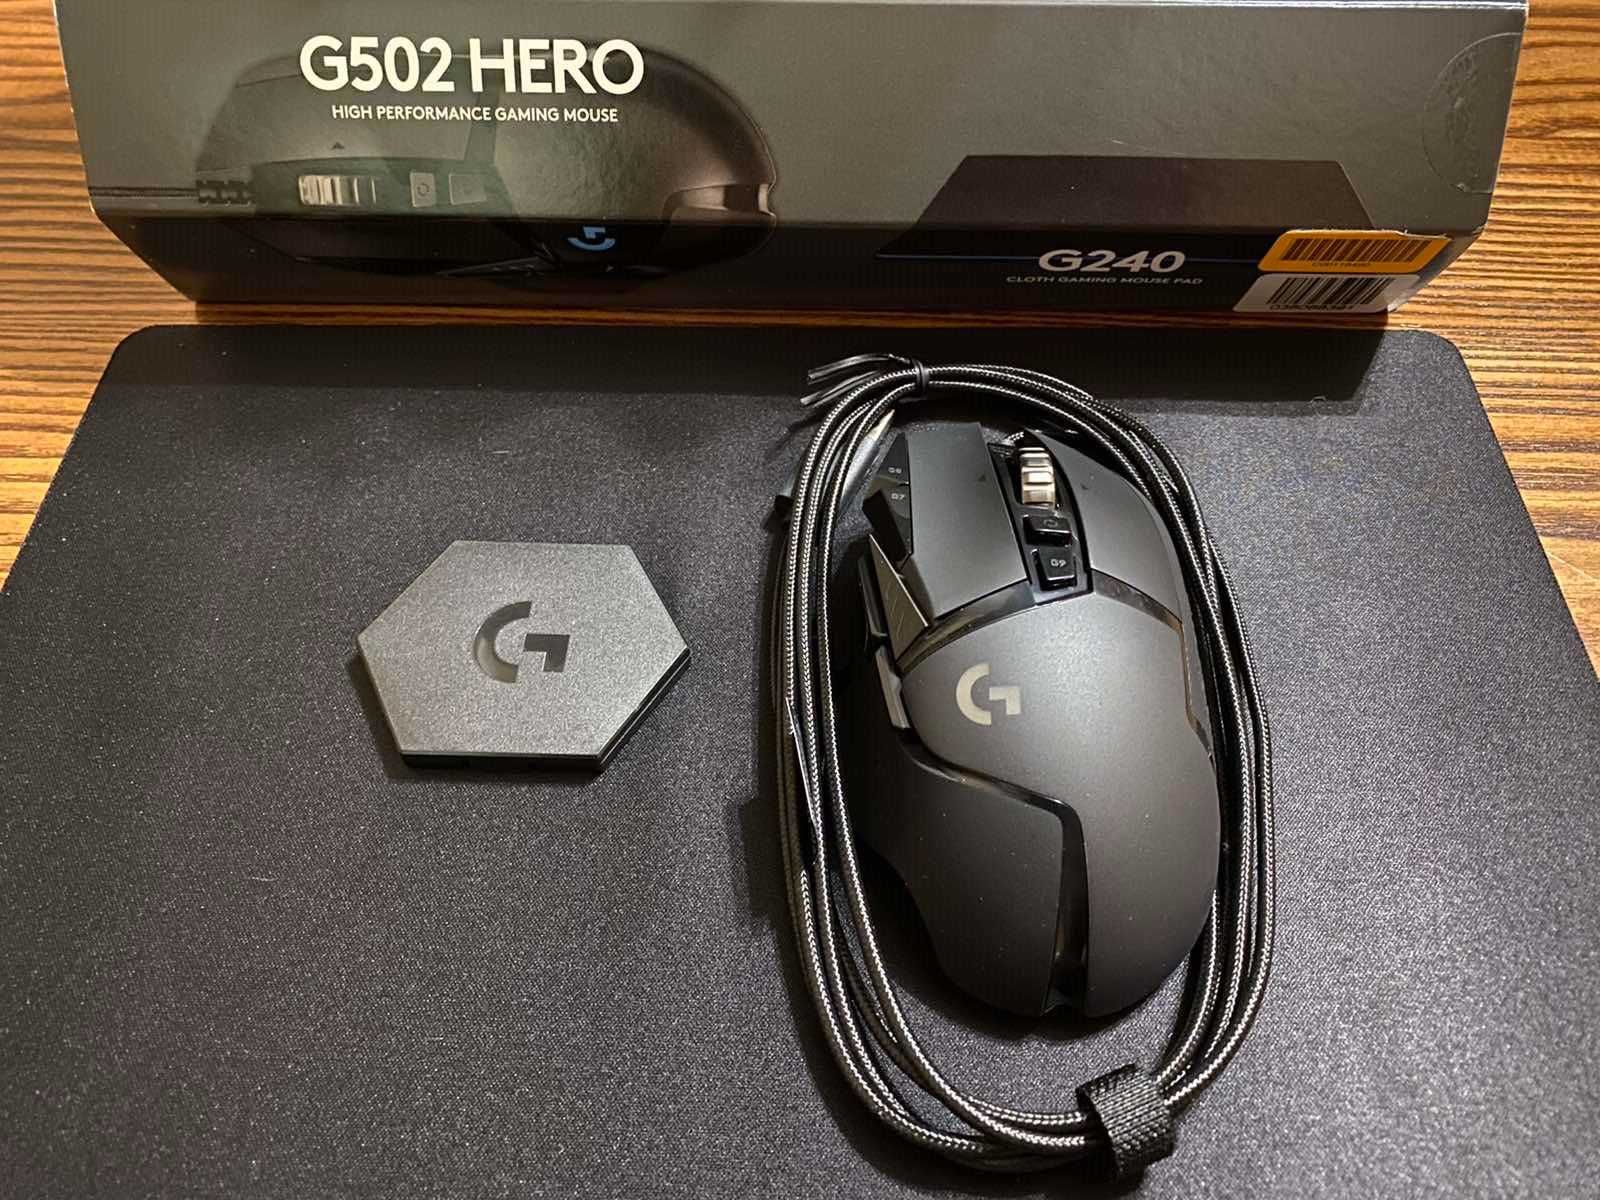 Комплект Logitech G502 Hero + G240 (коврик)